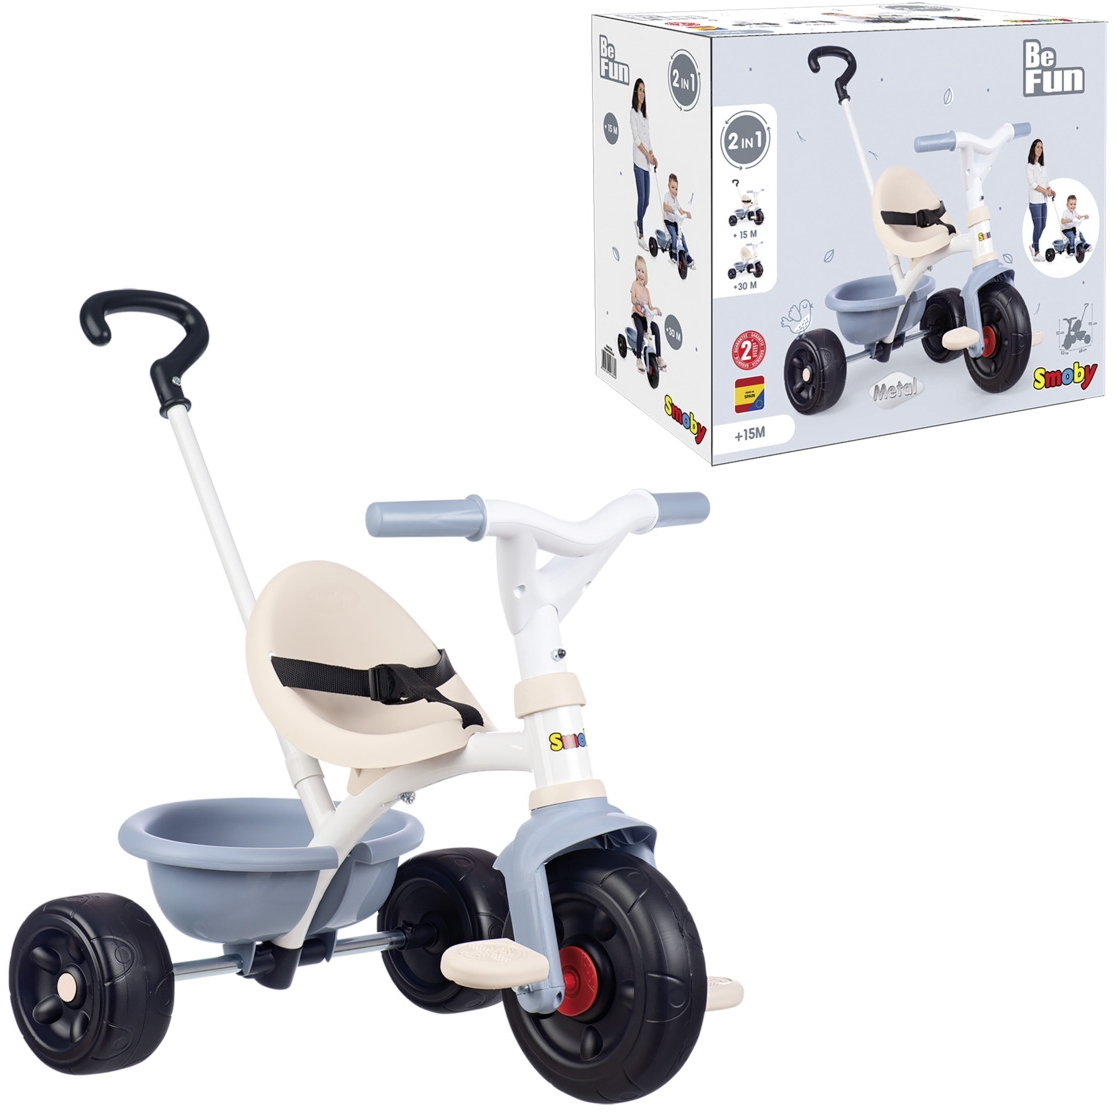 Spielwaren Express - Smoby Outdoor Spielzeug Fahrzeug Dreirad Be Fun blau  7600740336